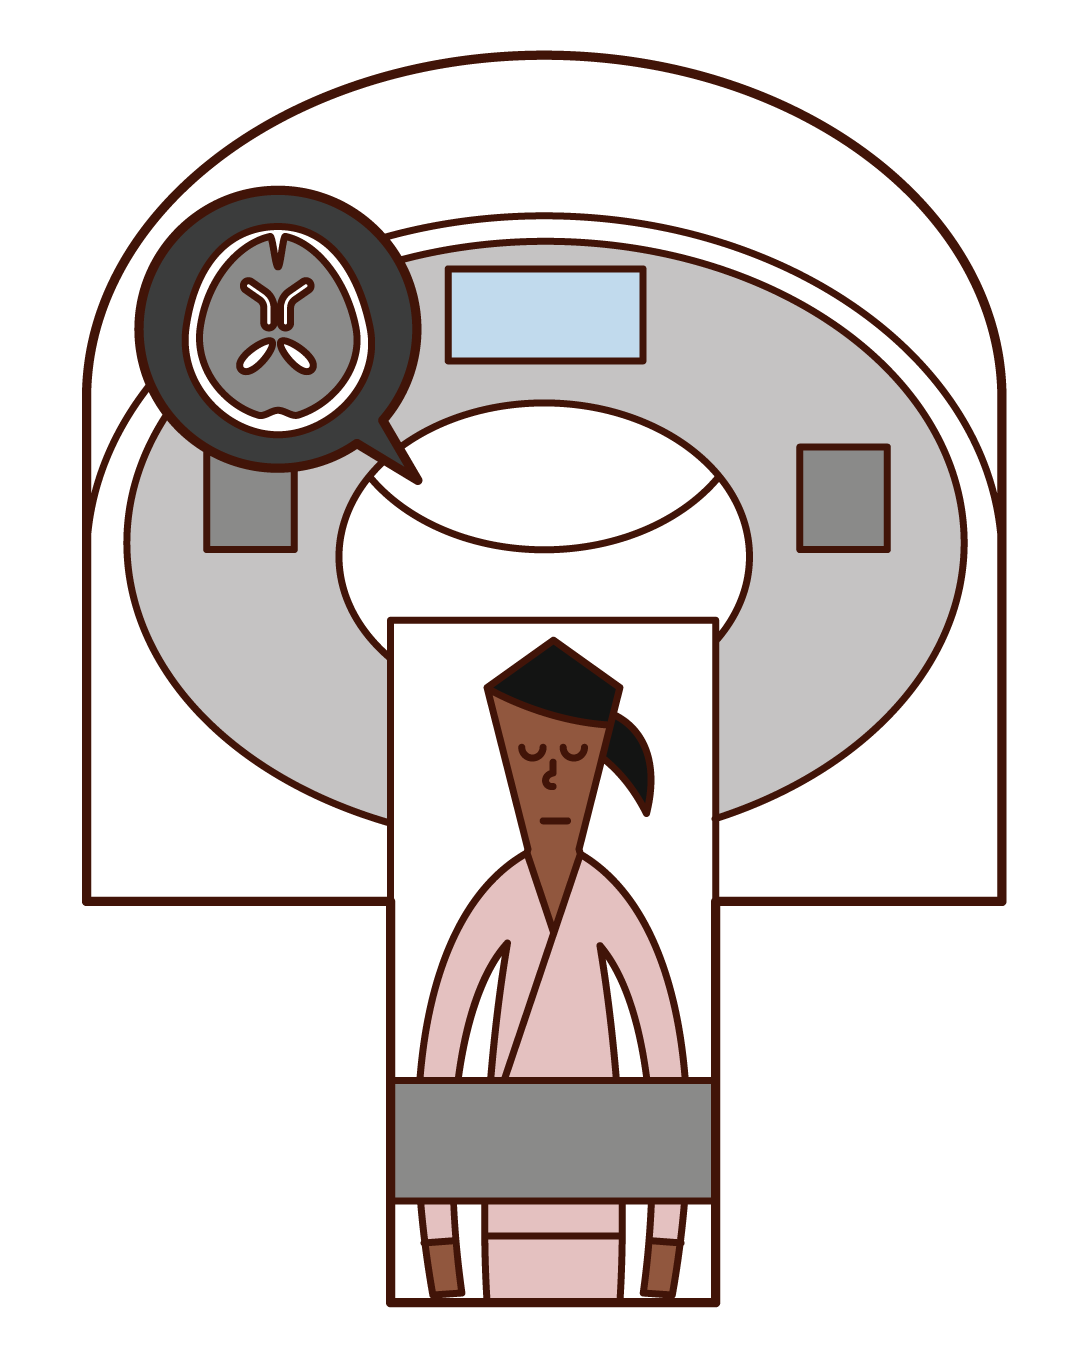 MRI 및 CT 검사를 받은 사람(여성)의 그림입니다